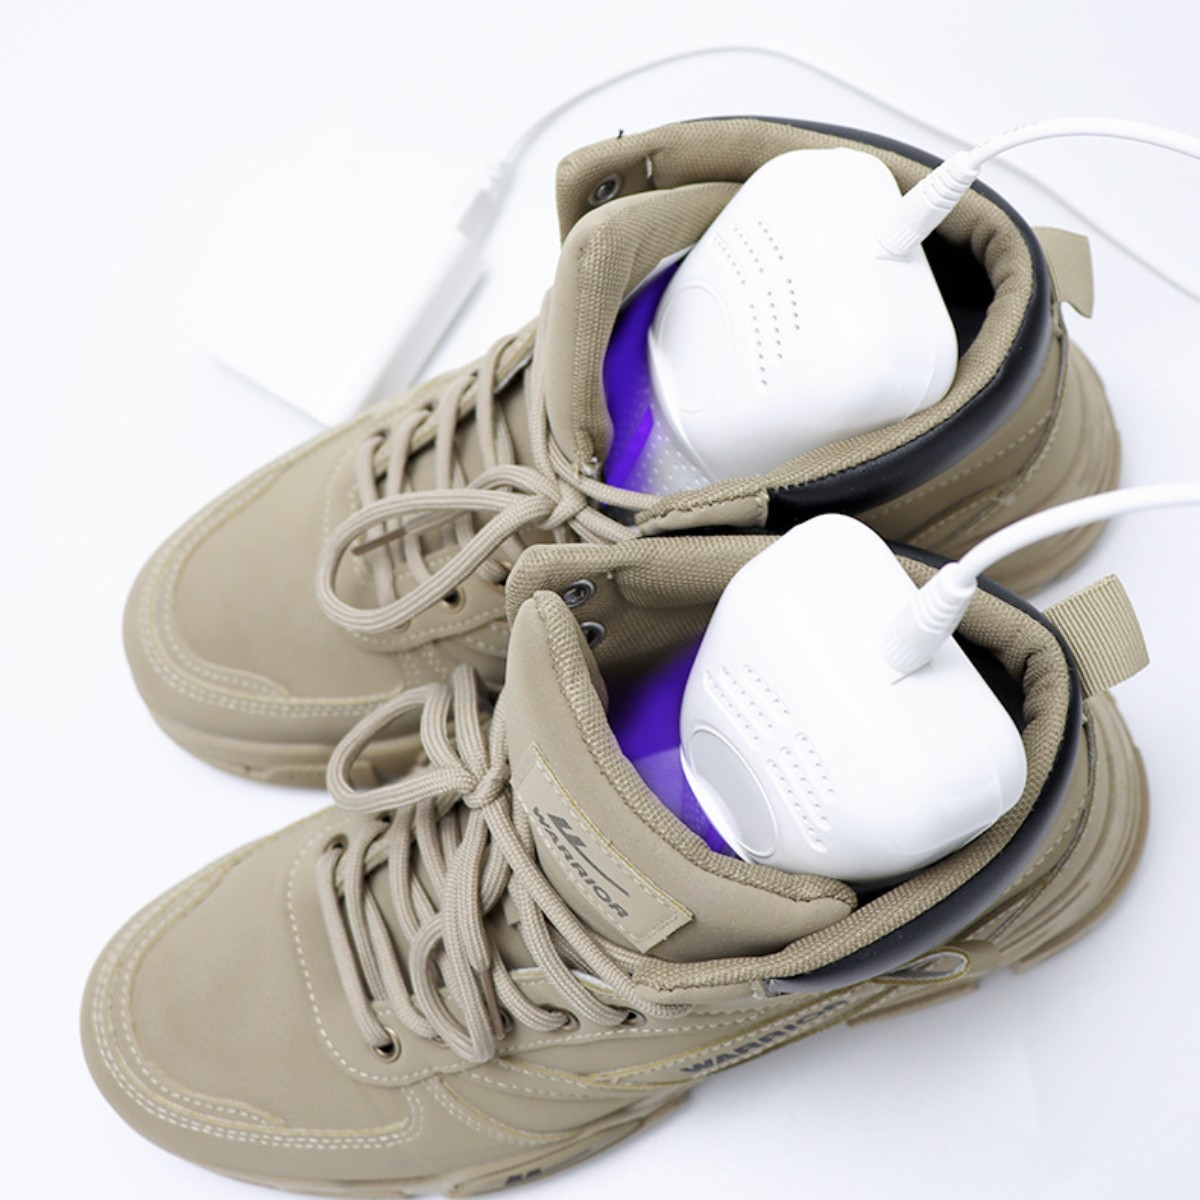 SYNTEK Roaster Deodorising Timing Shoe Home Schuhtrockner Shoe Folding Shoe (10 Watt) Schuhtrockner Schuhe Intelligent Drying